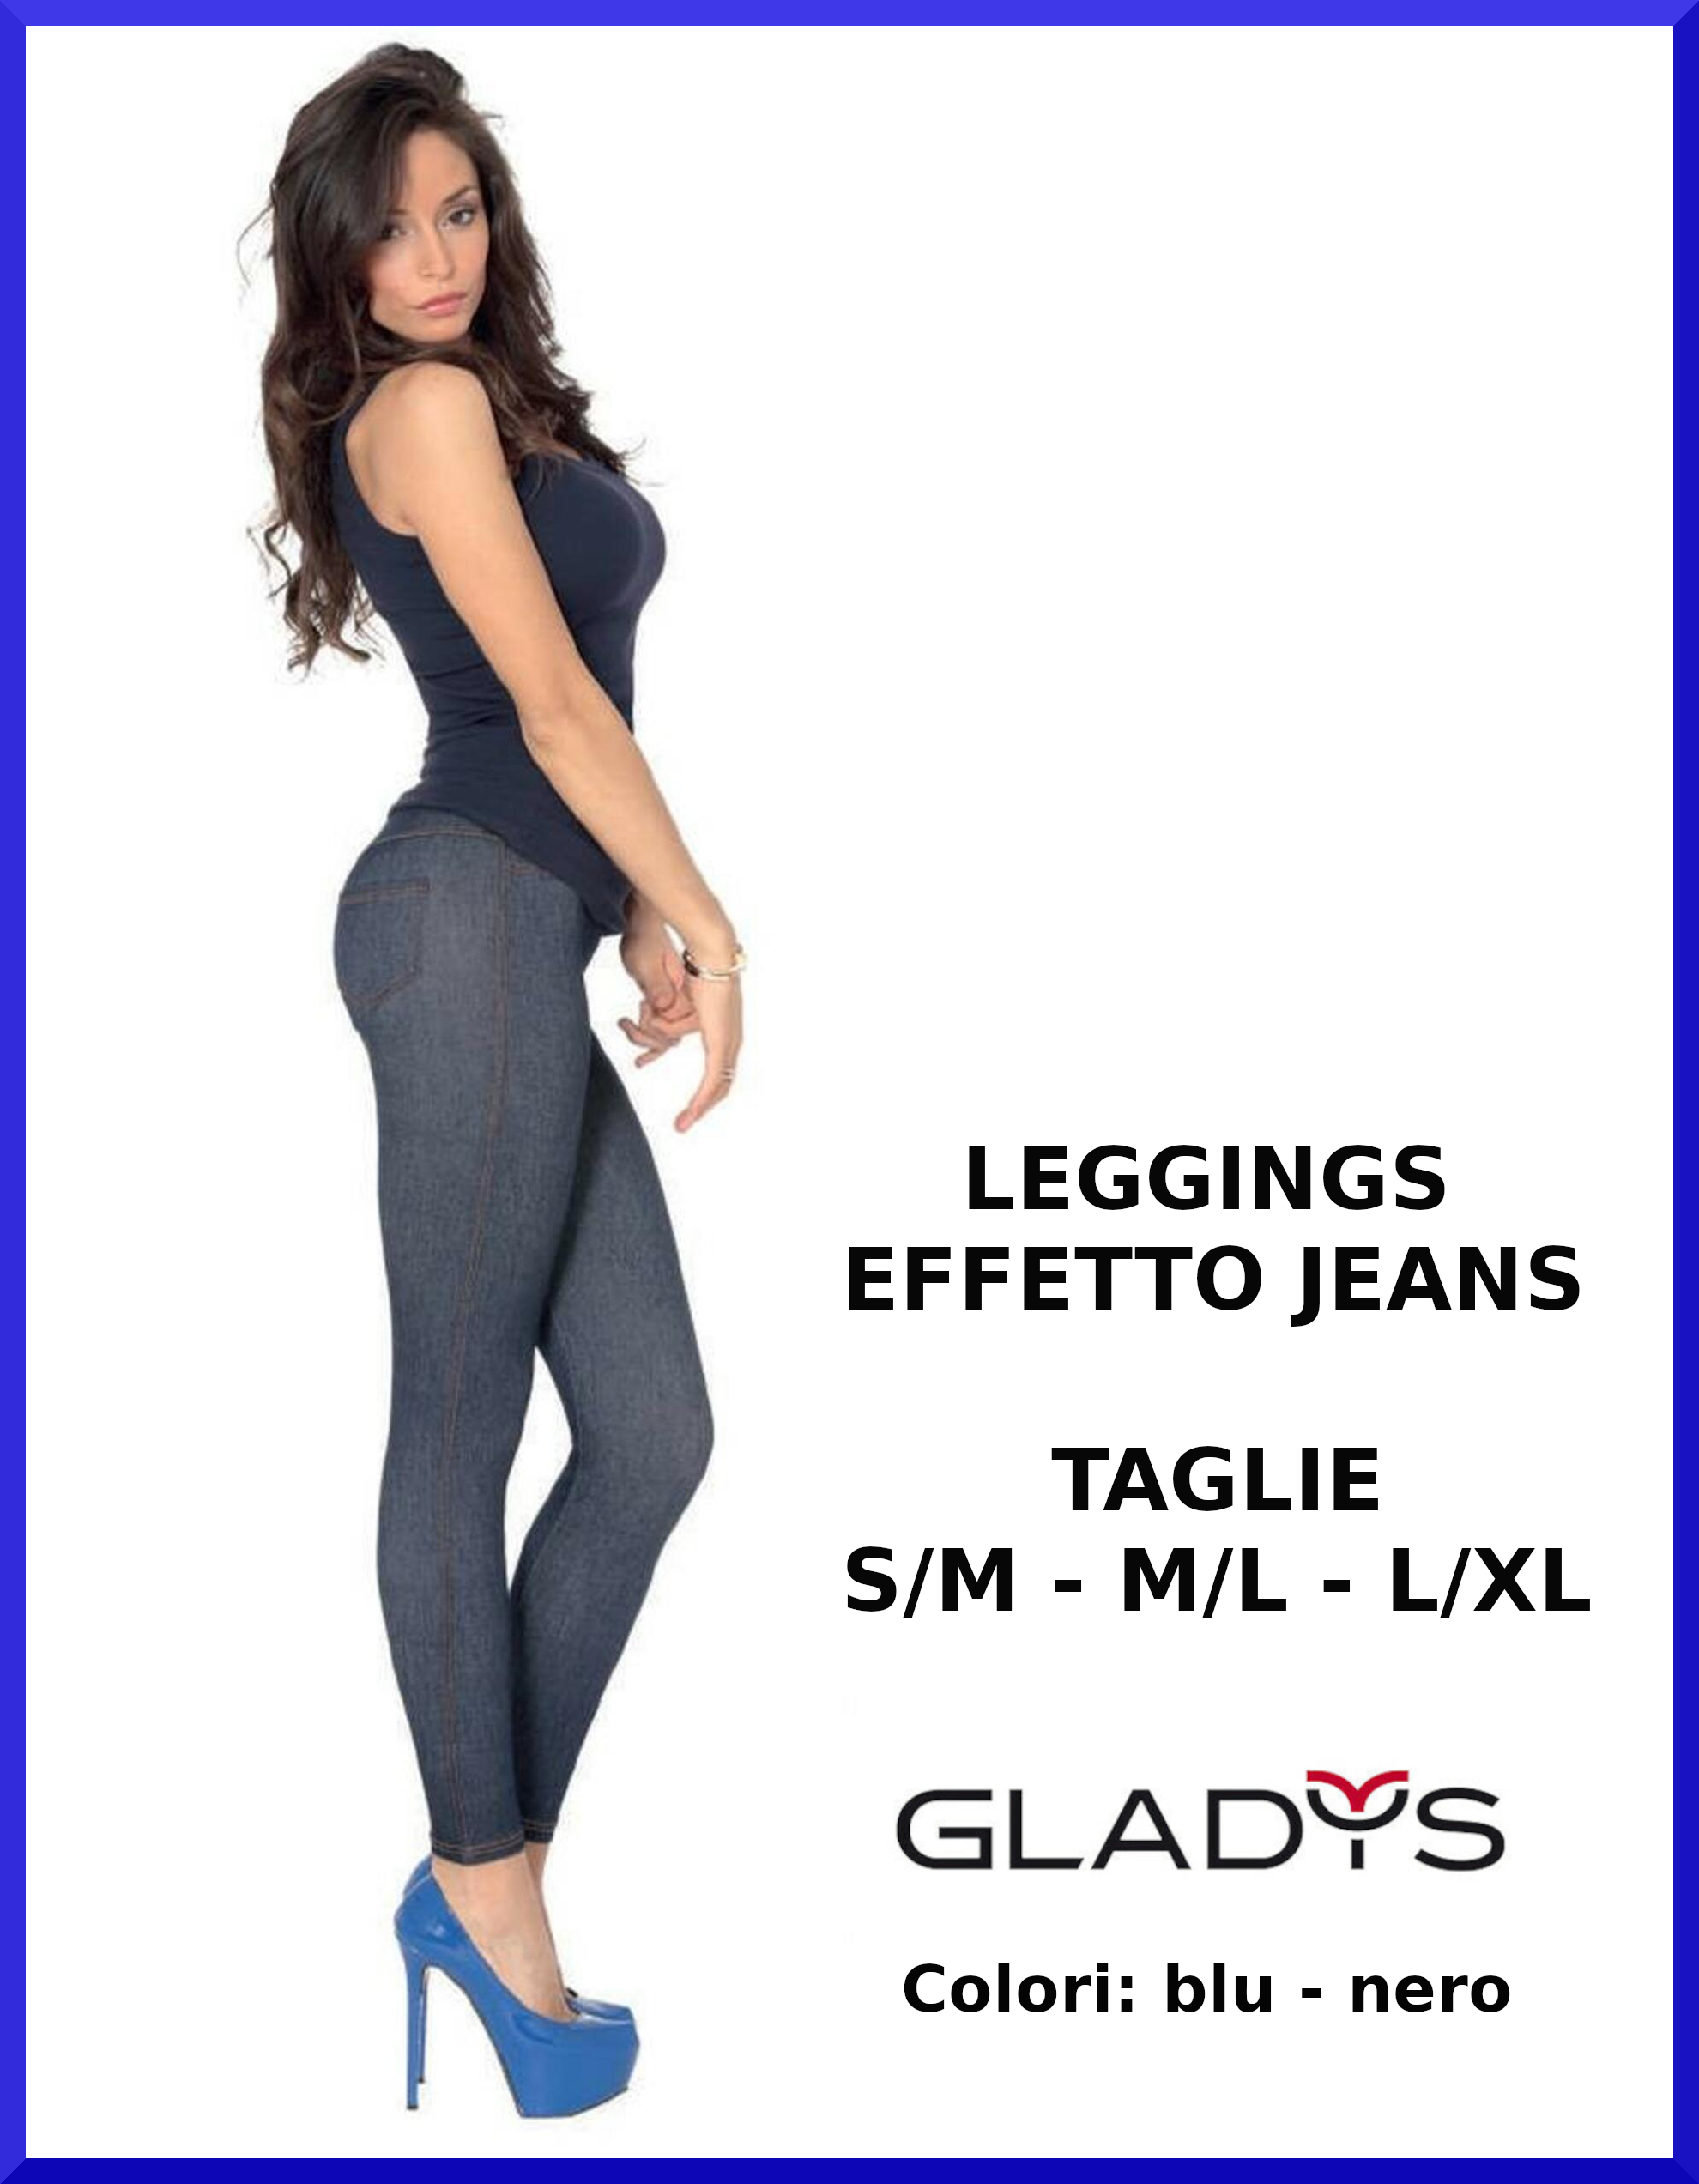 Leggings Gladys estivi effetto jeans